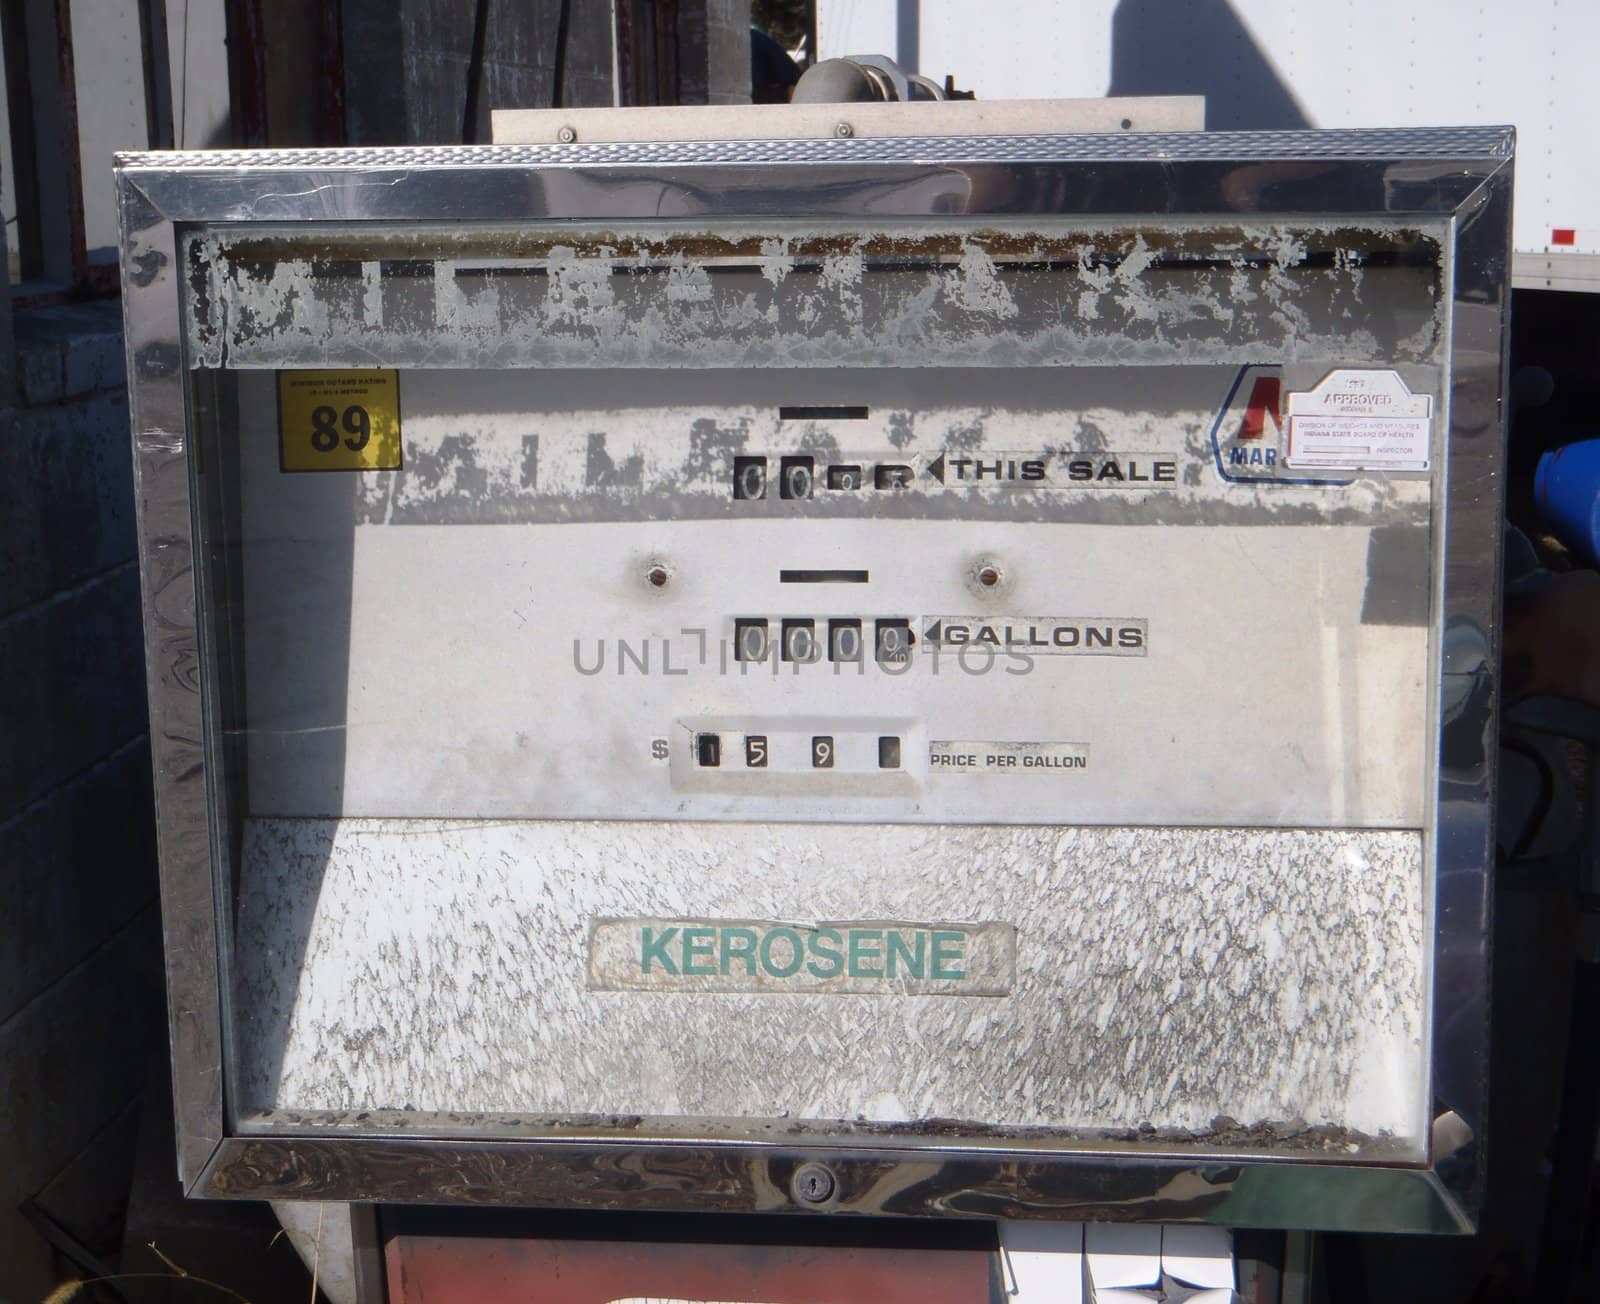 Antique kerosene dispenser by RefocusPhoto